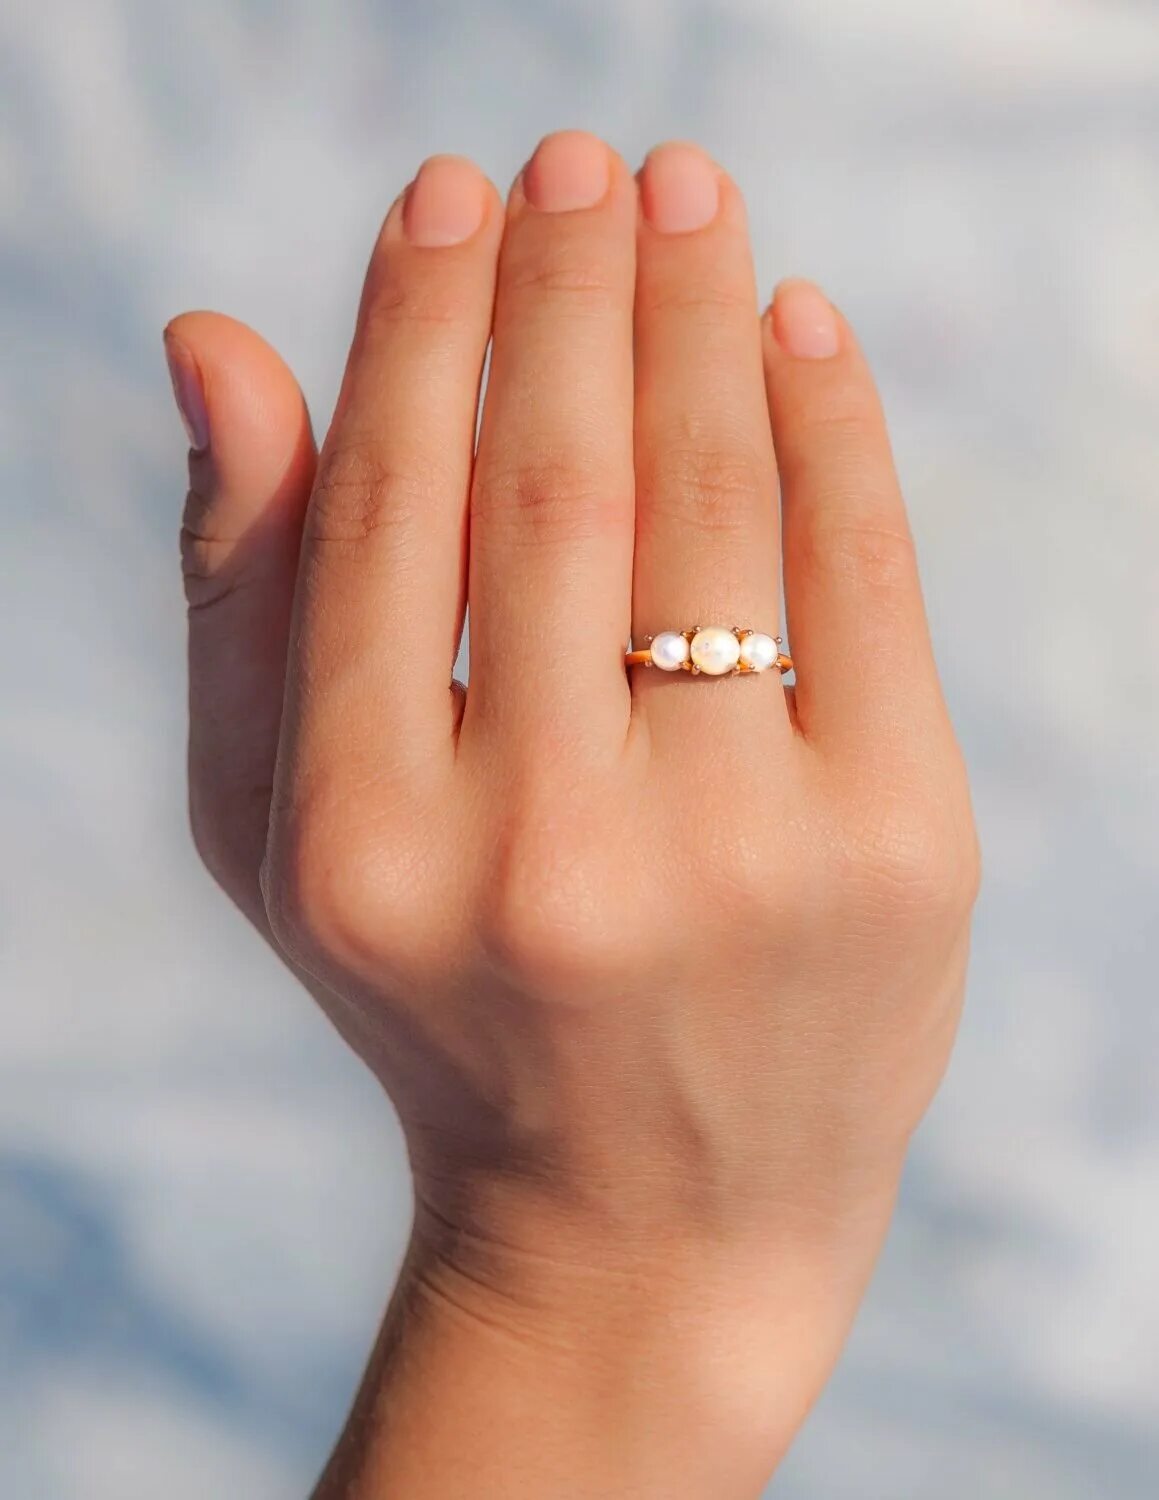 Кольцо на пальце. Обручальное кольцо на пальце. Rjkmewj YF gfkmw. Красивое кольцо на пальце. Кольцо на правом безымянном пальце у девушки